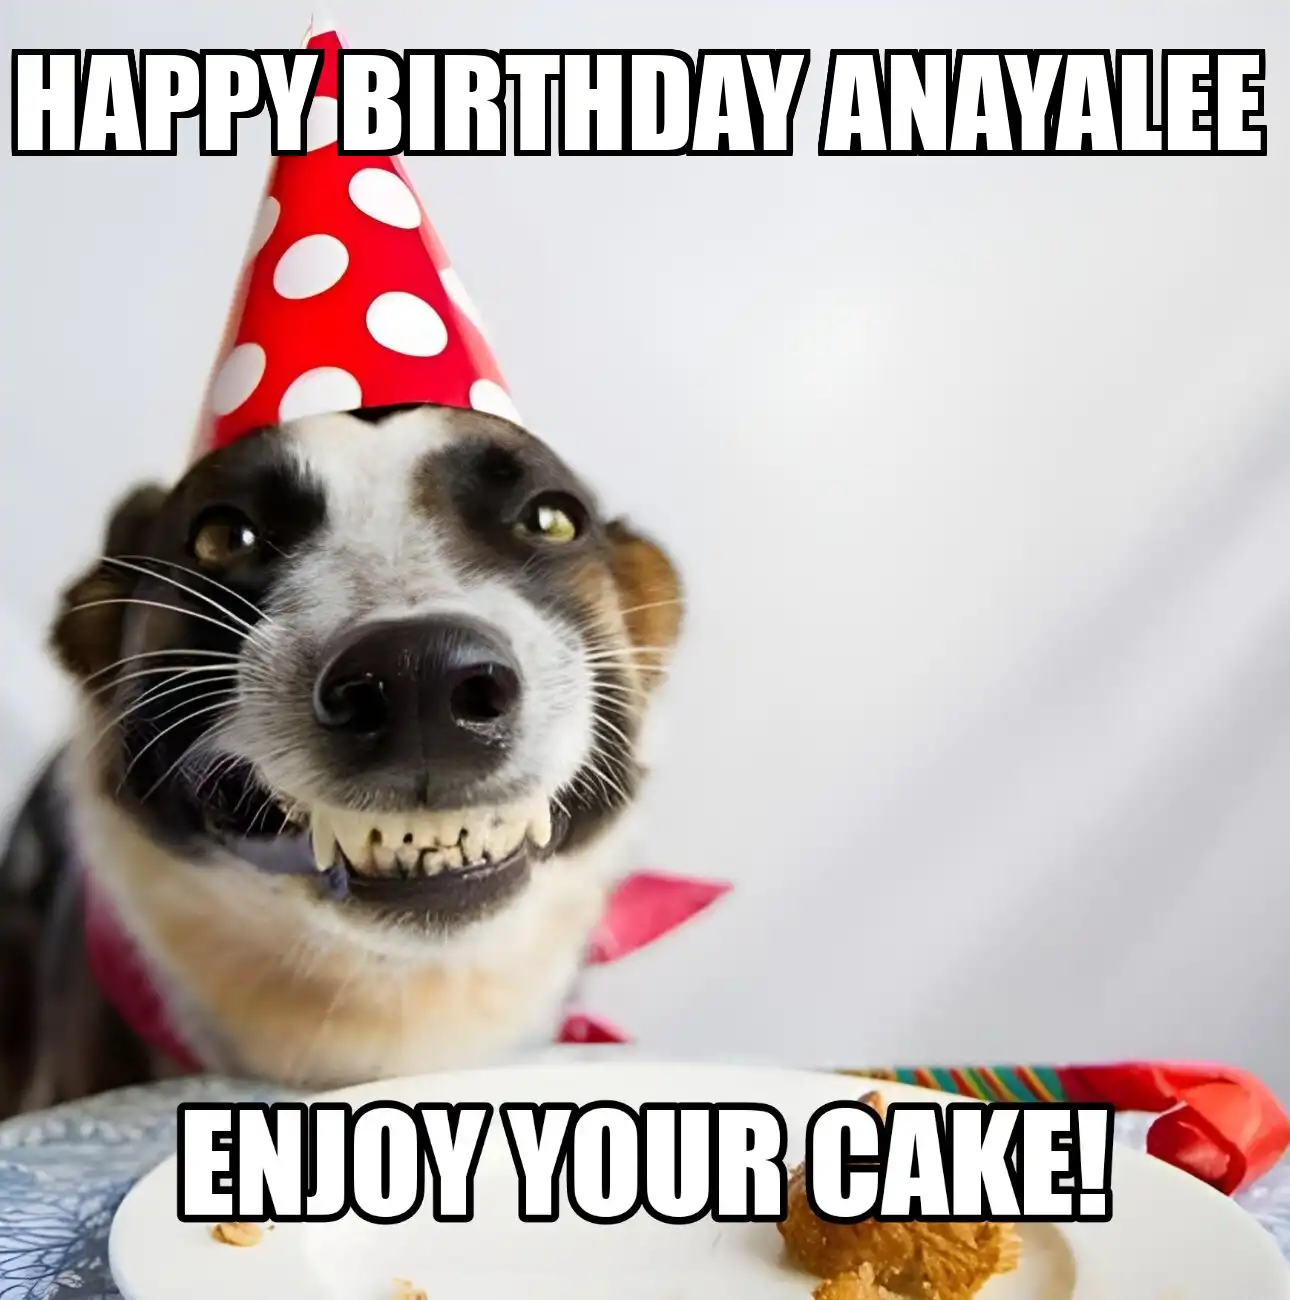 Happy Birthday Anayalee Enjoy Your Cake Dog Meme